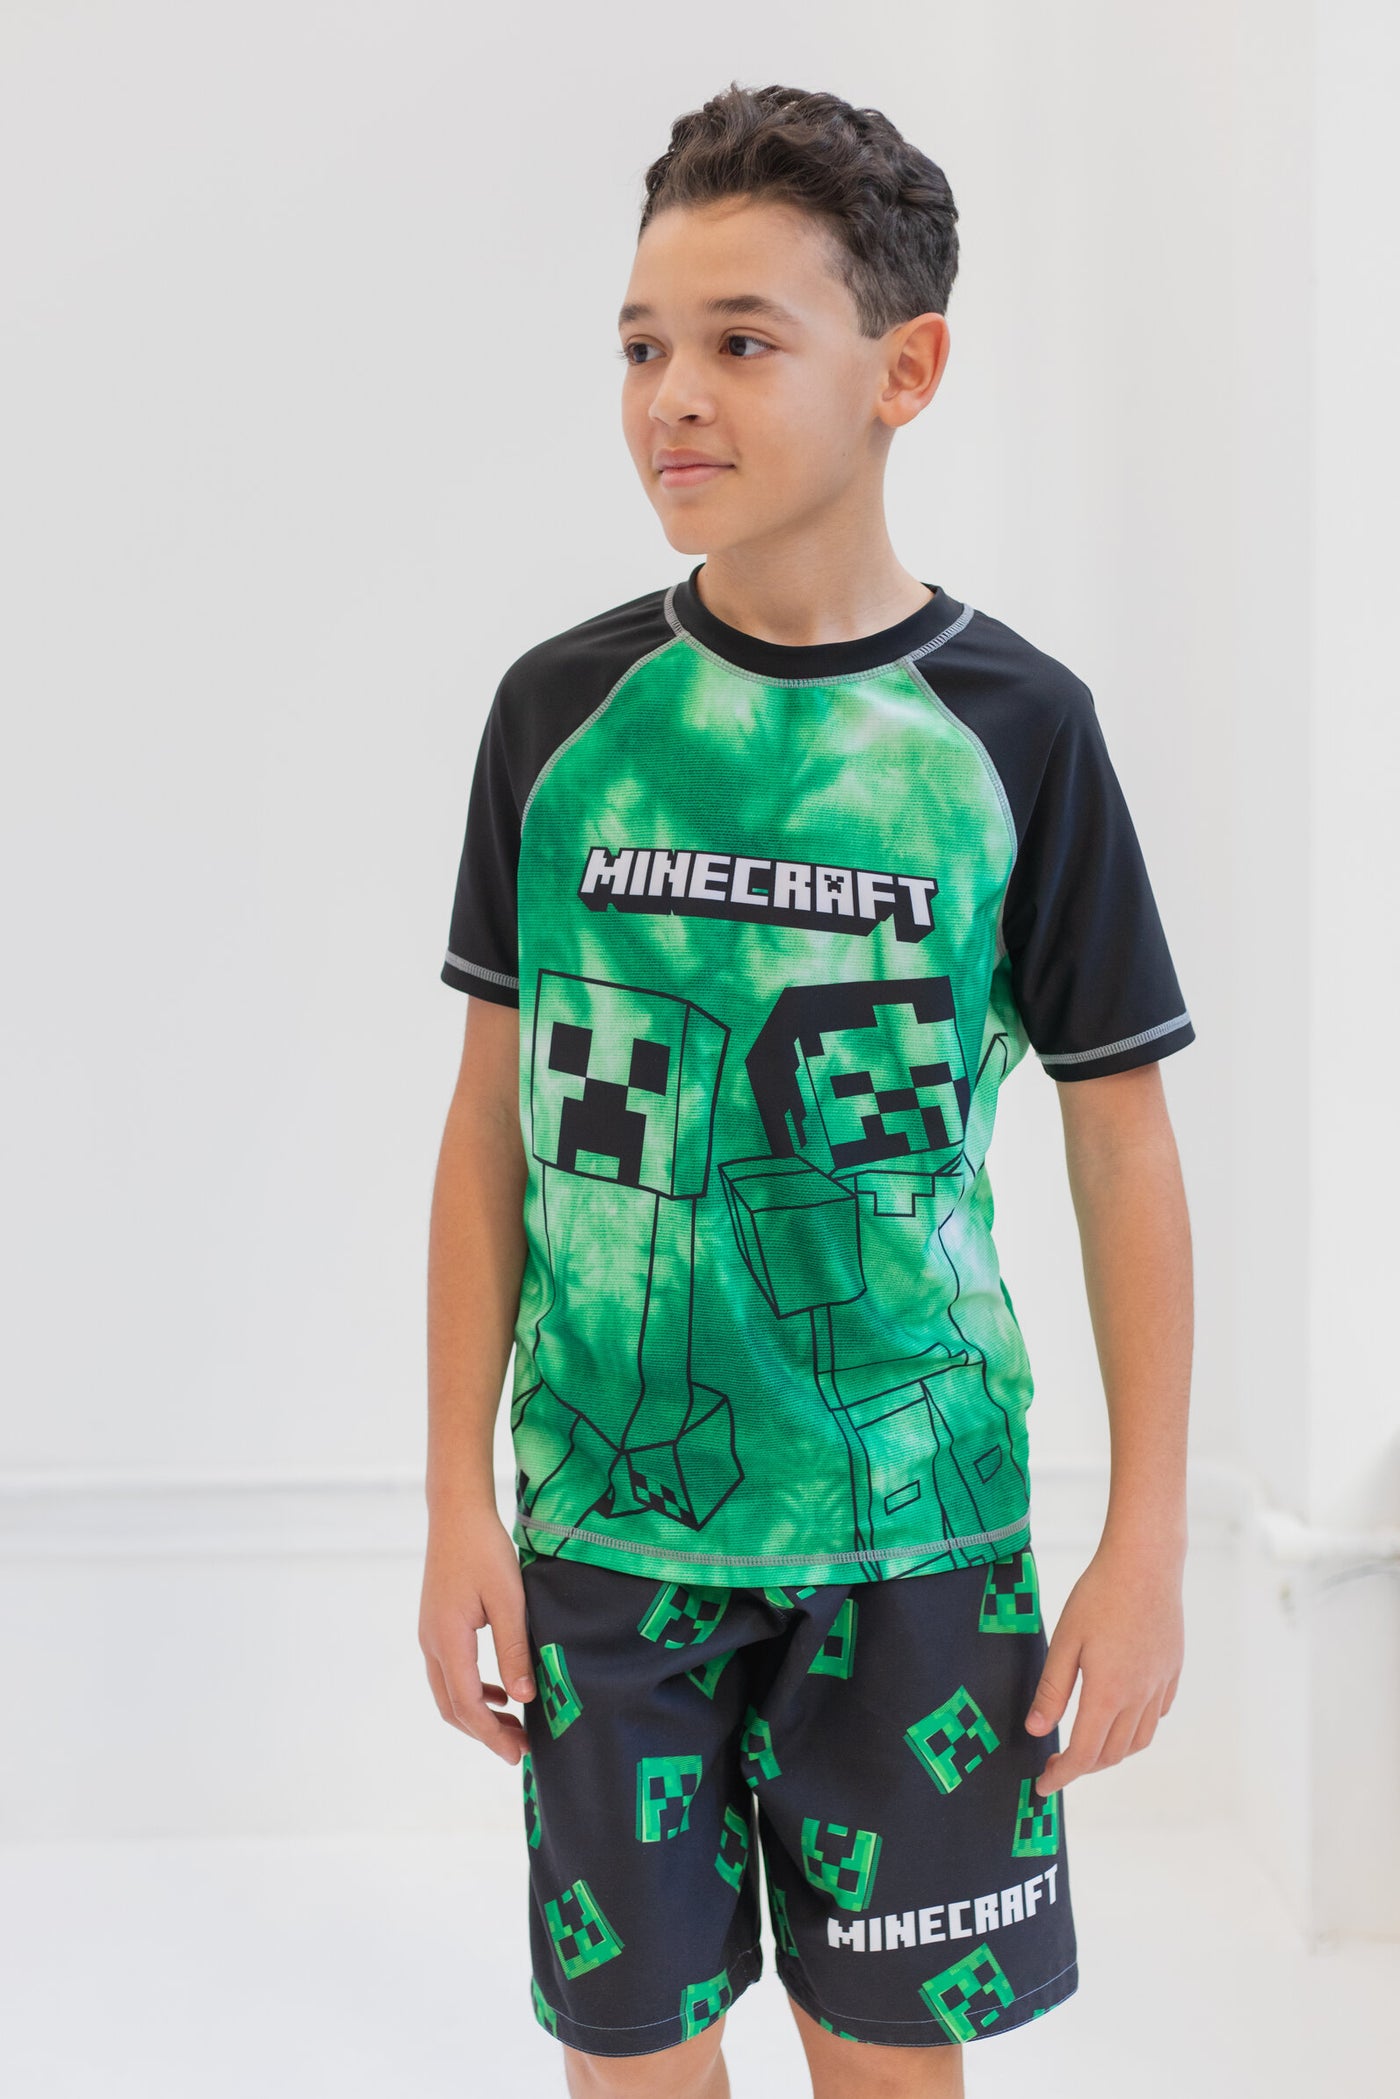 Minecraft UPF 50+ Rash Guard Swim Trunks Outfit Set